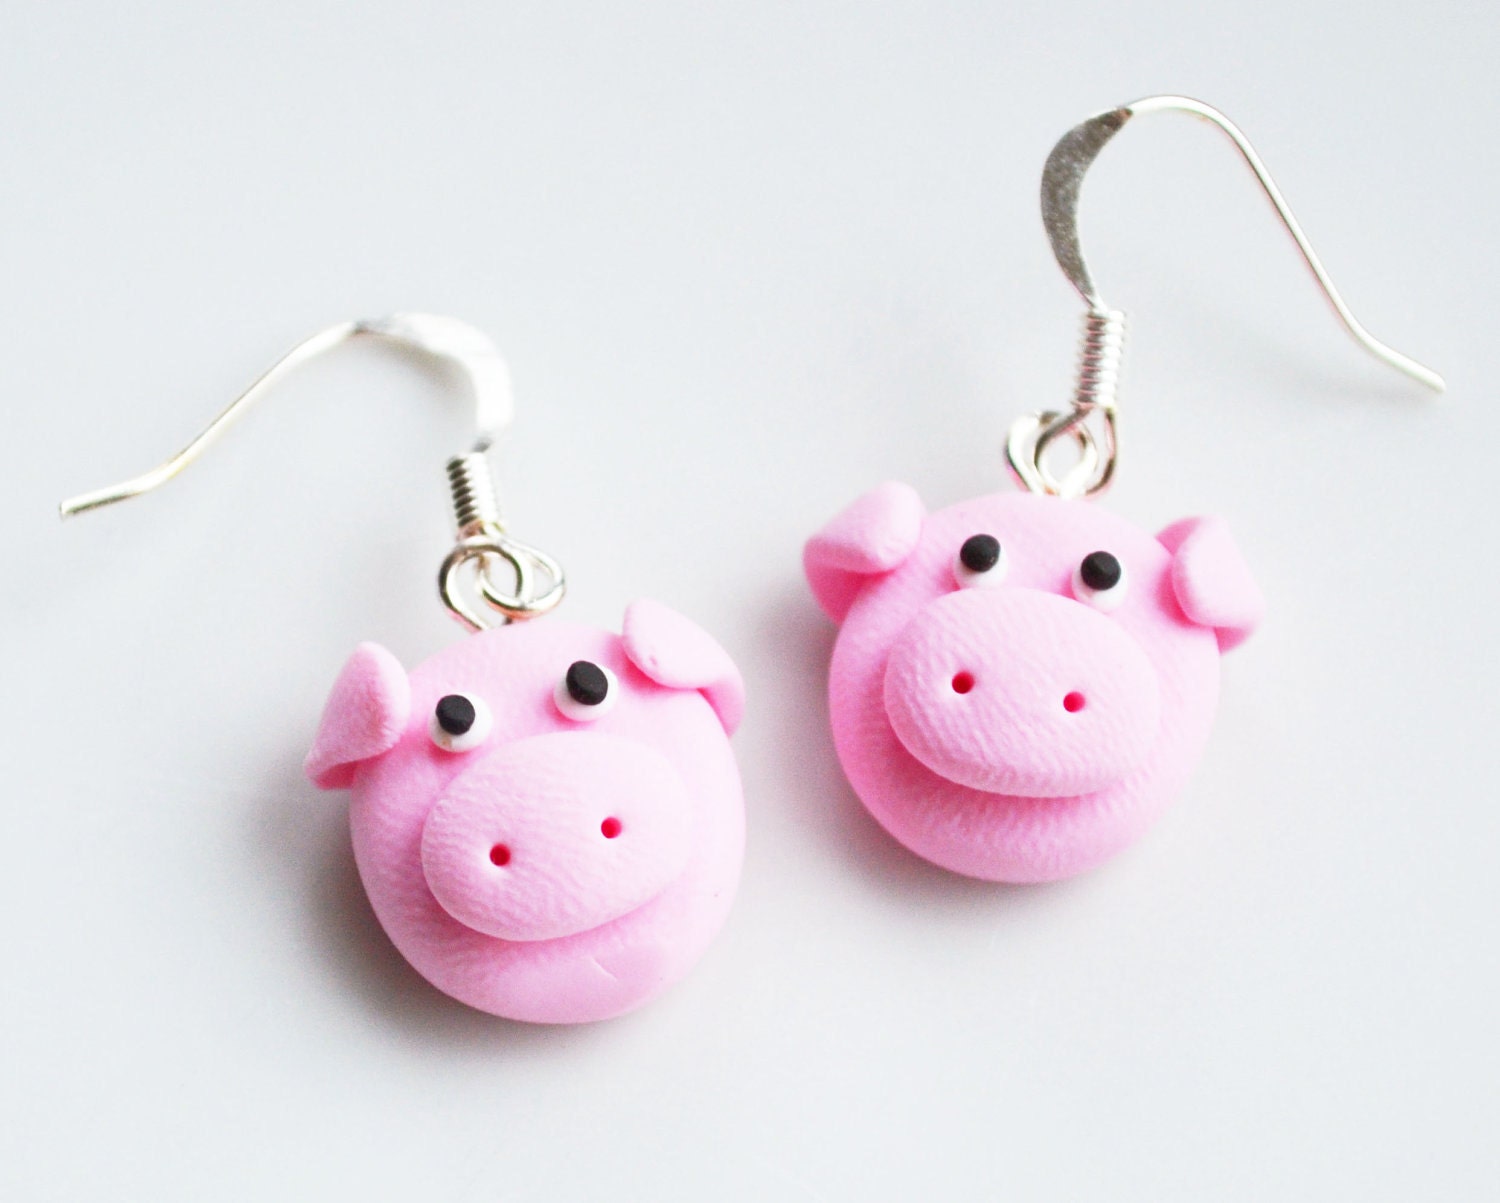  Earrings on Fimo Pig Earrings Polymer Clay Pink By Sweetnneatjewellery On Etsy